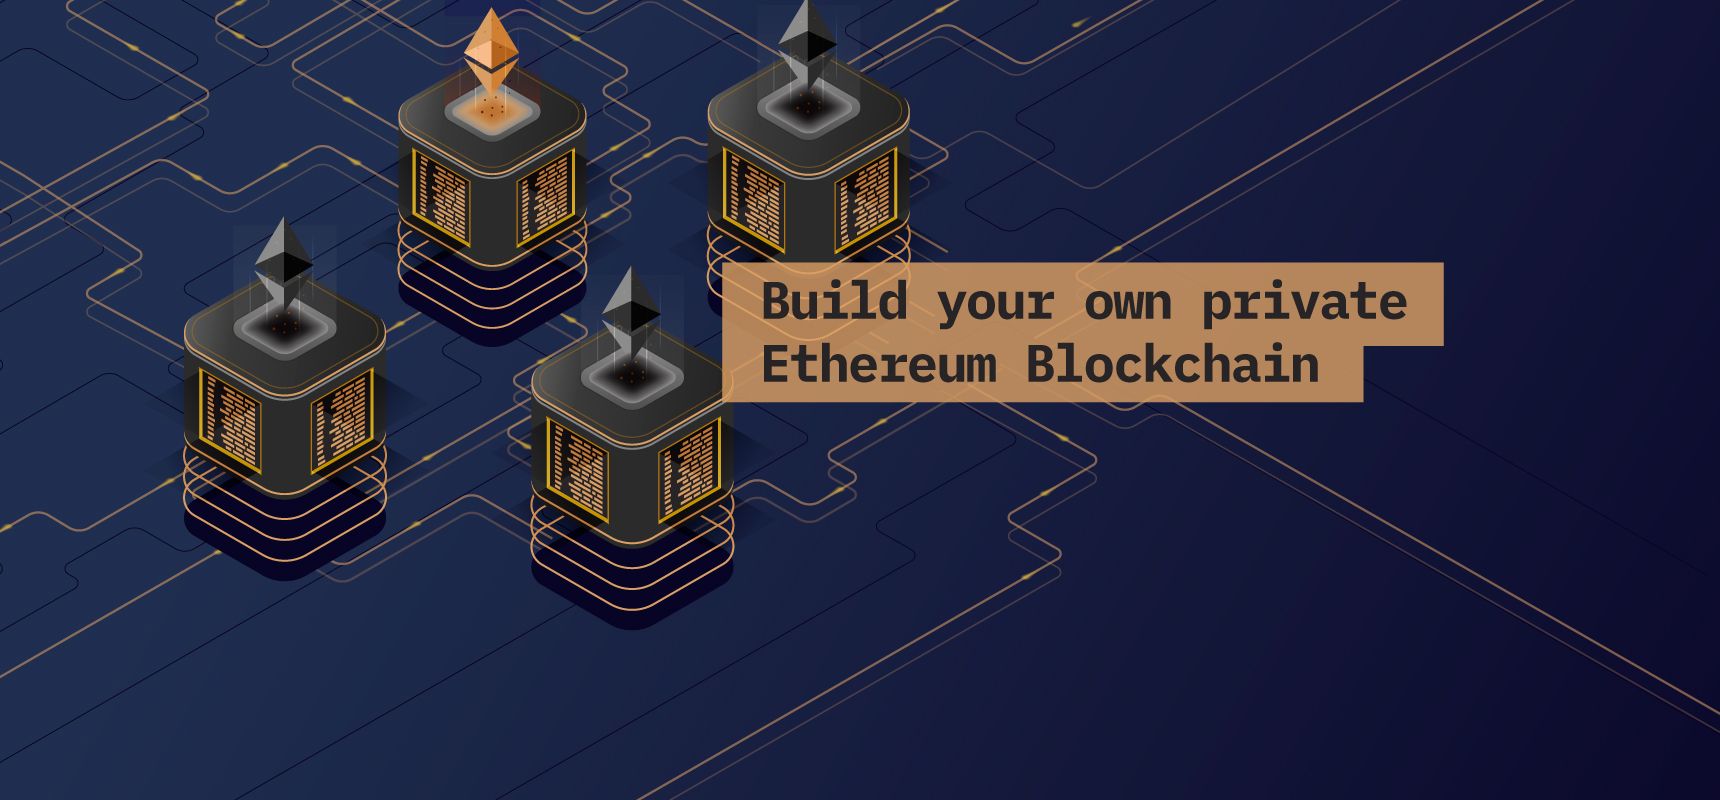 Build your own private etehreum blockchain with geth